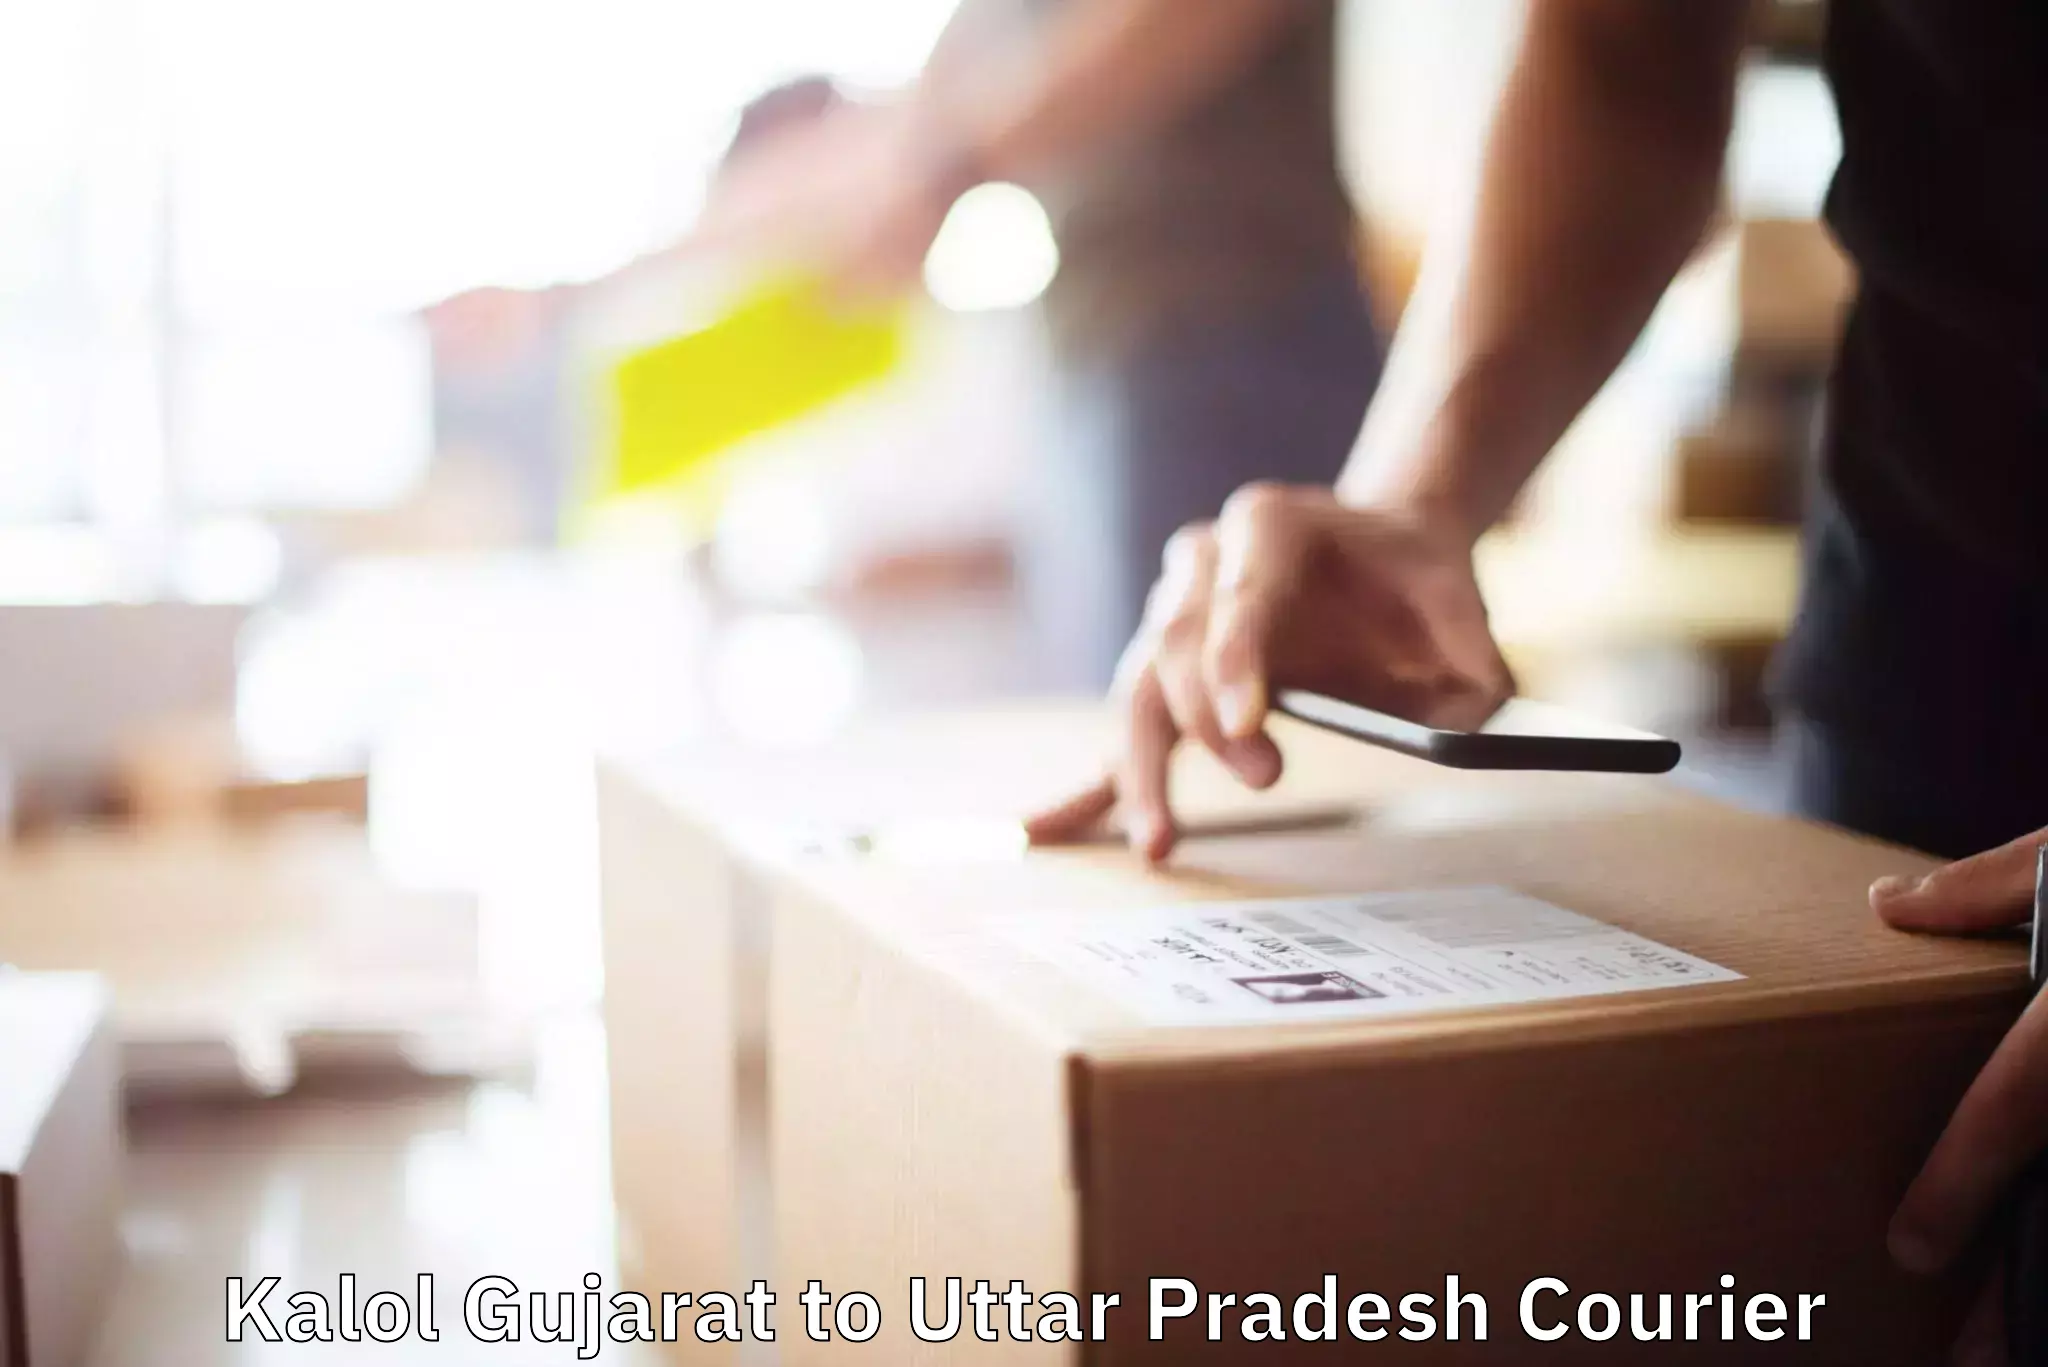 Furniture delivery service Kalol Gujarat to Bewar